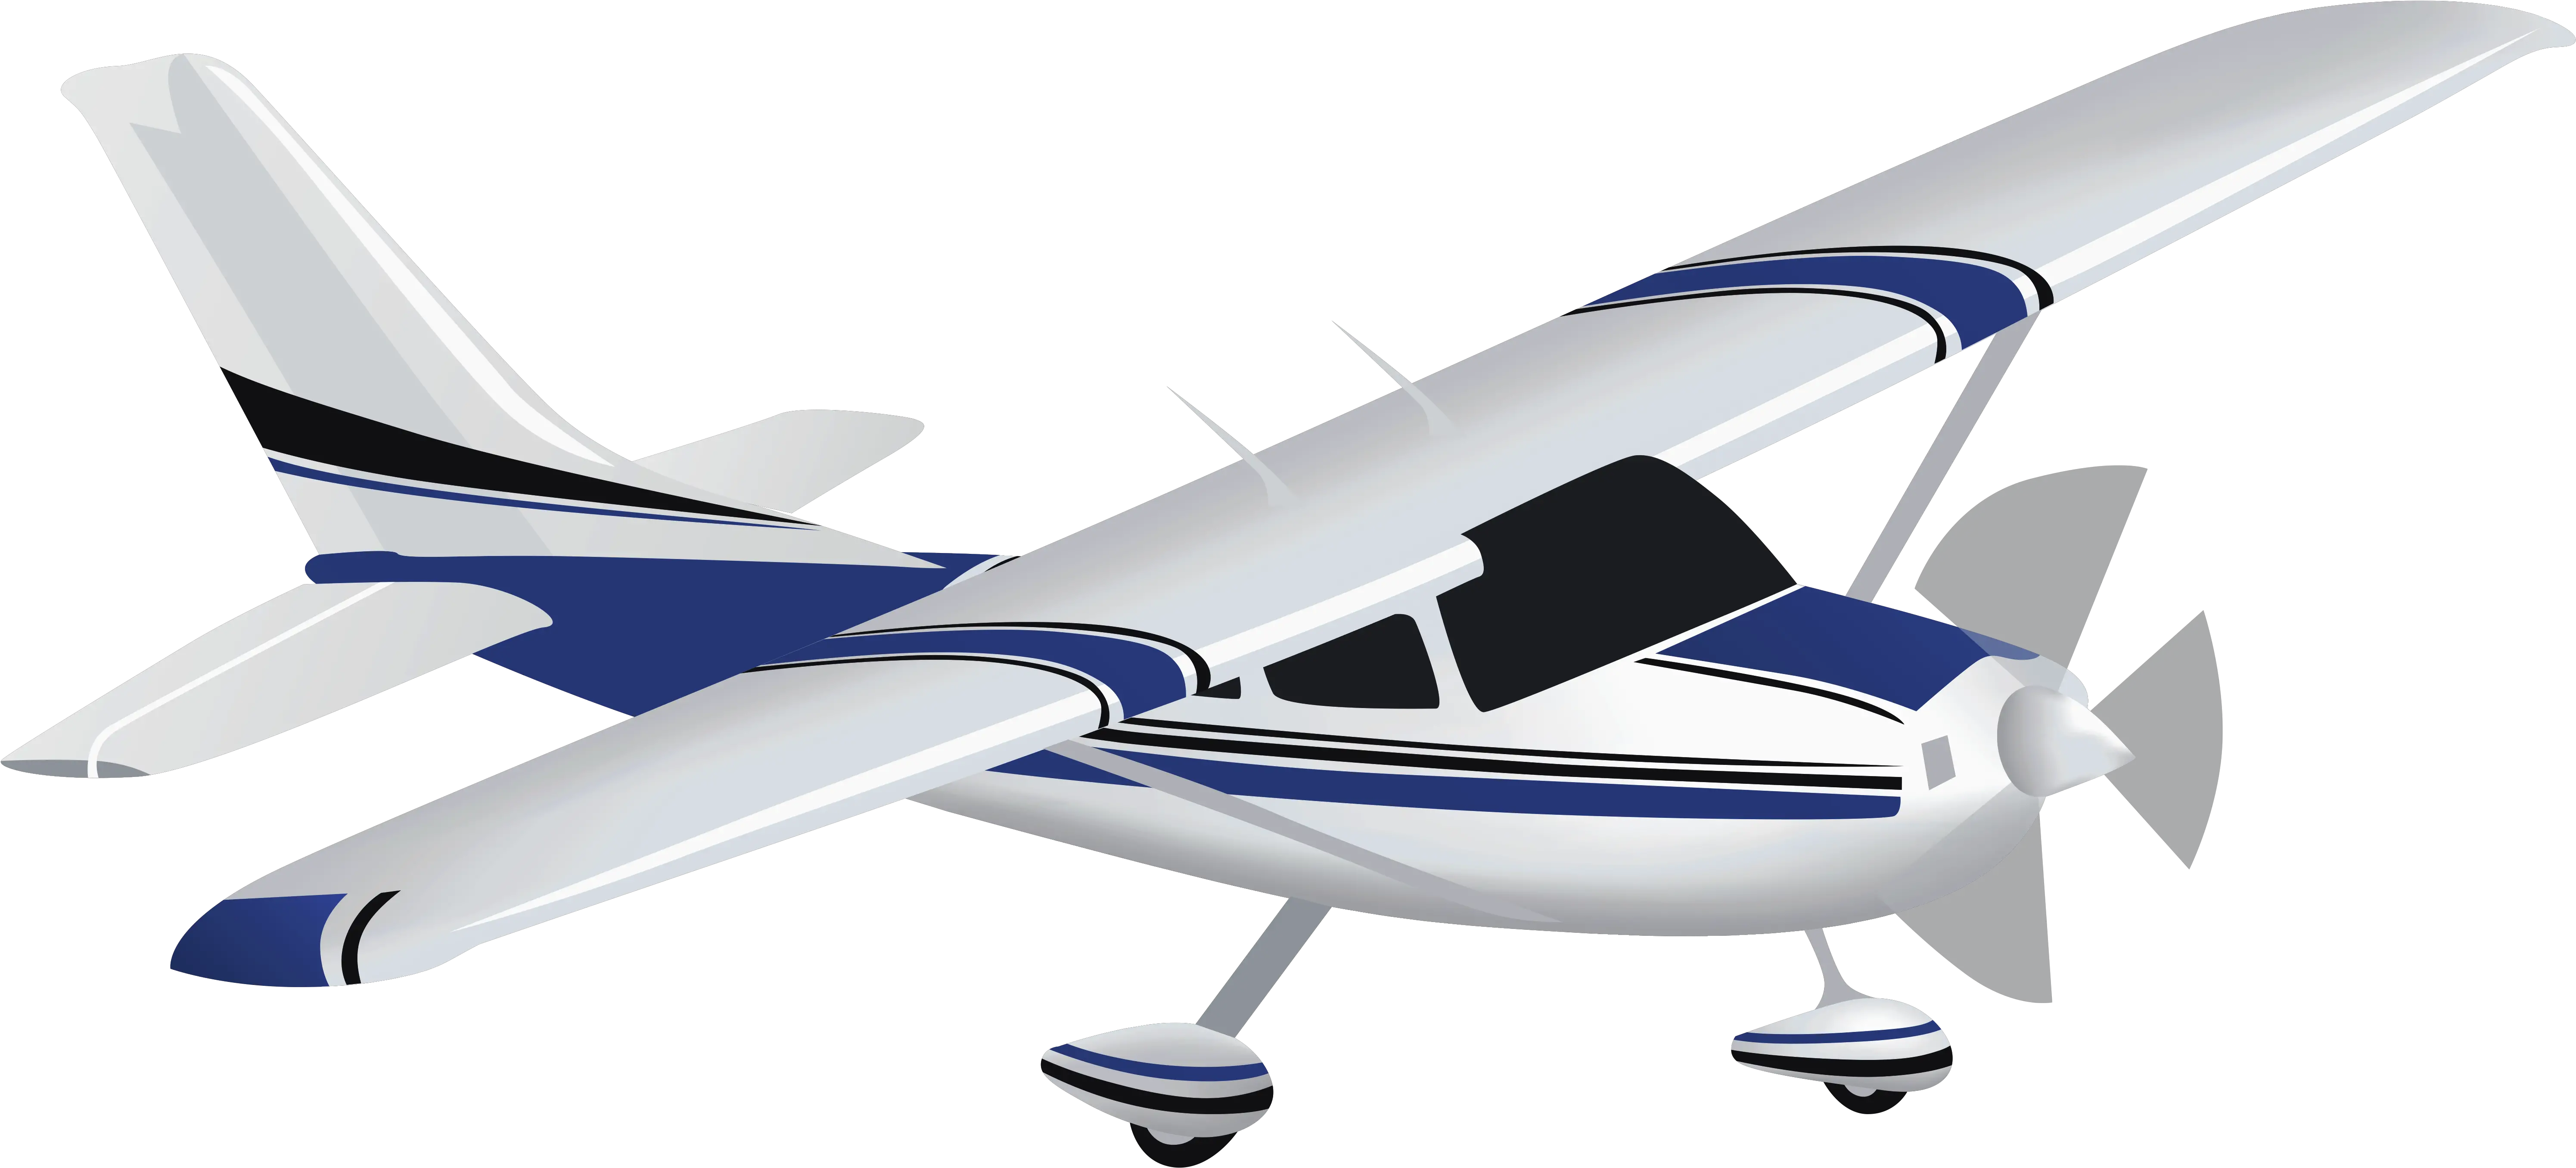 Download Light Airplane Plane Transparent Point Hd Transparent Small Plane Png Point Of Light Png